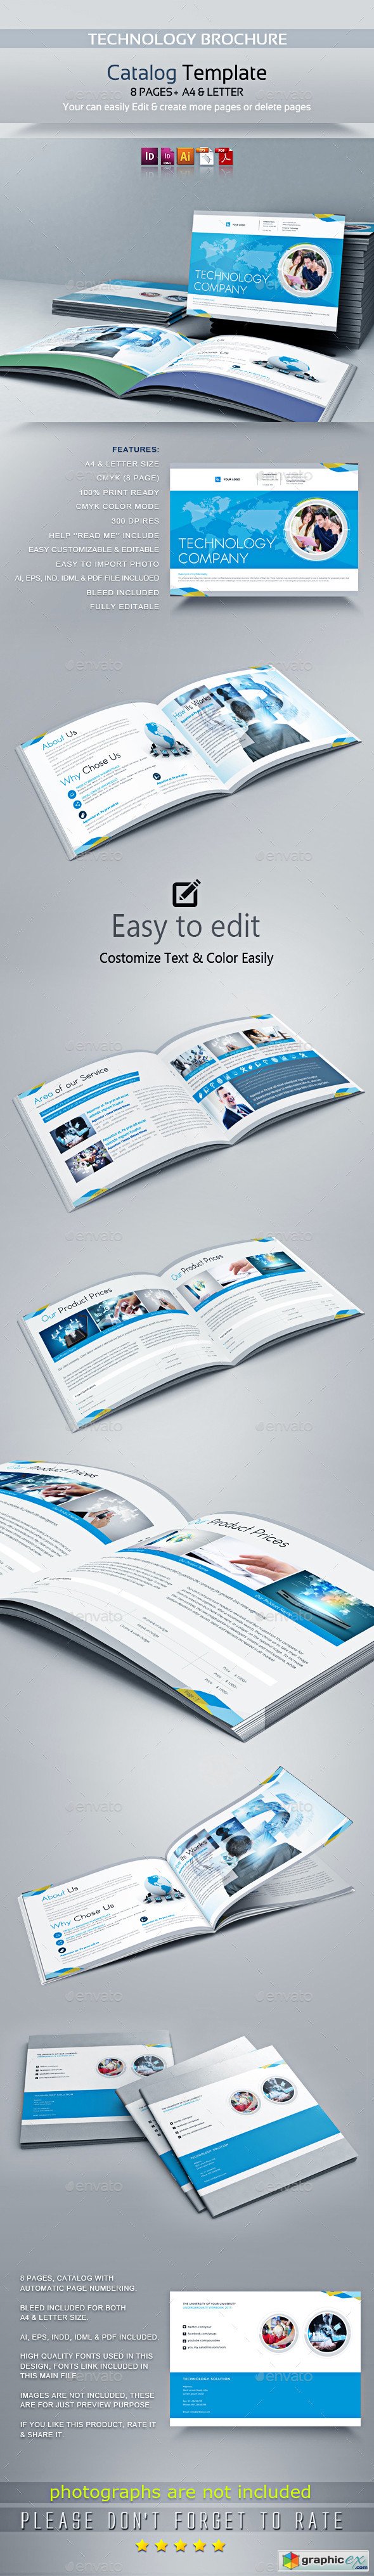 Technology Brochure Catalog 20214890